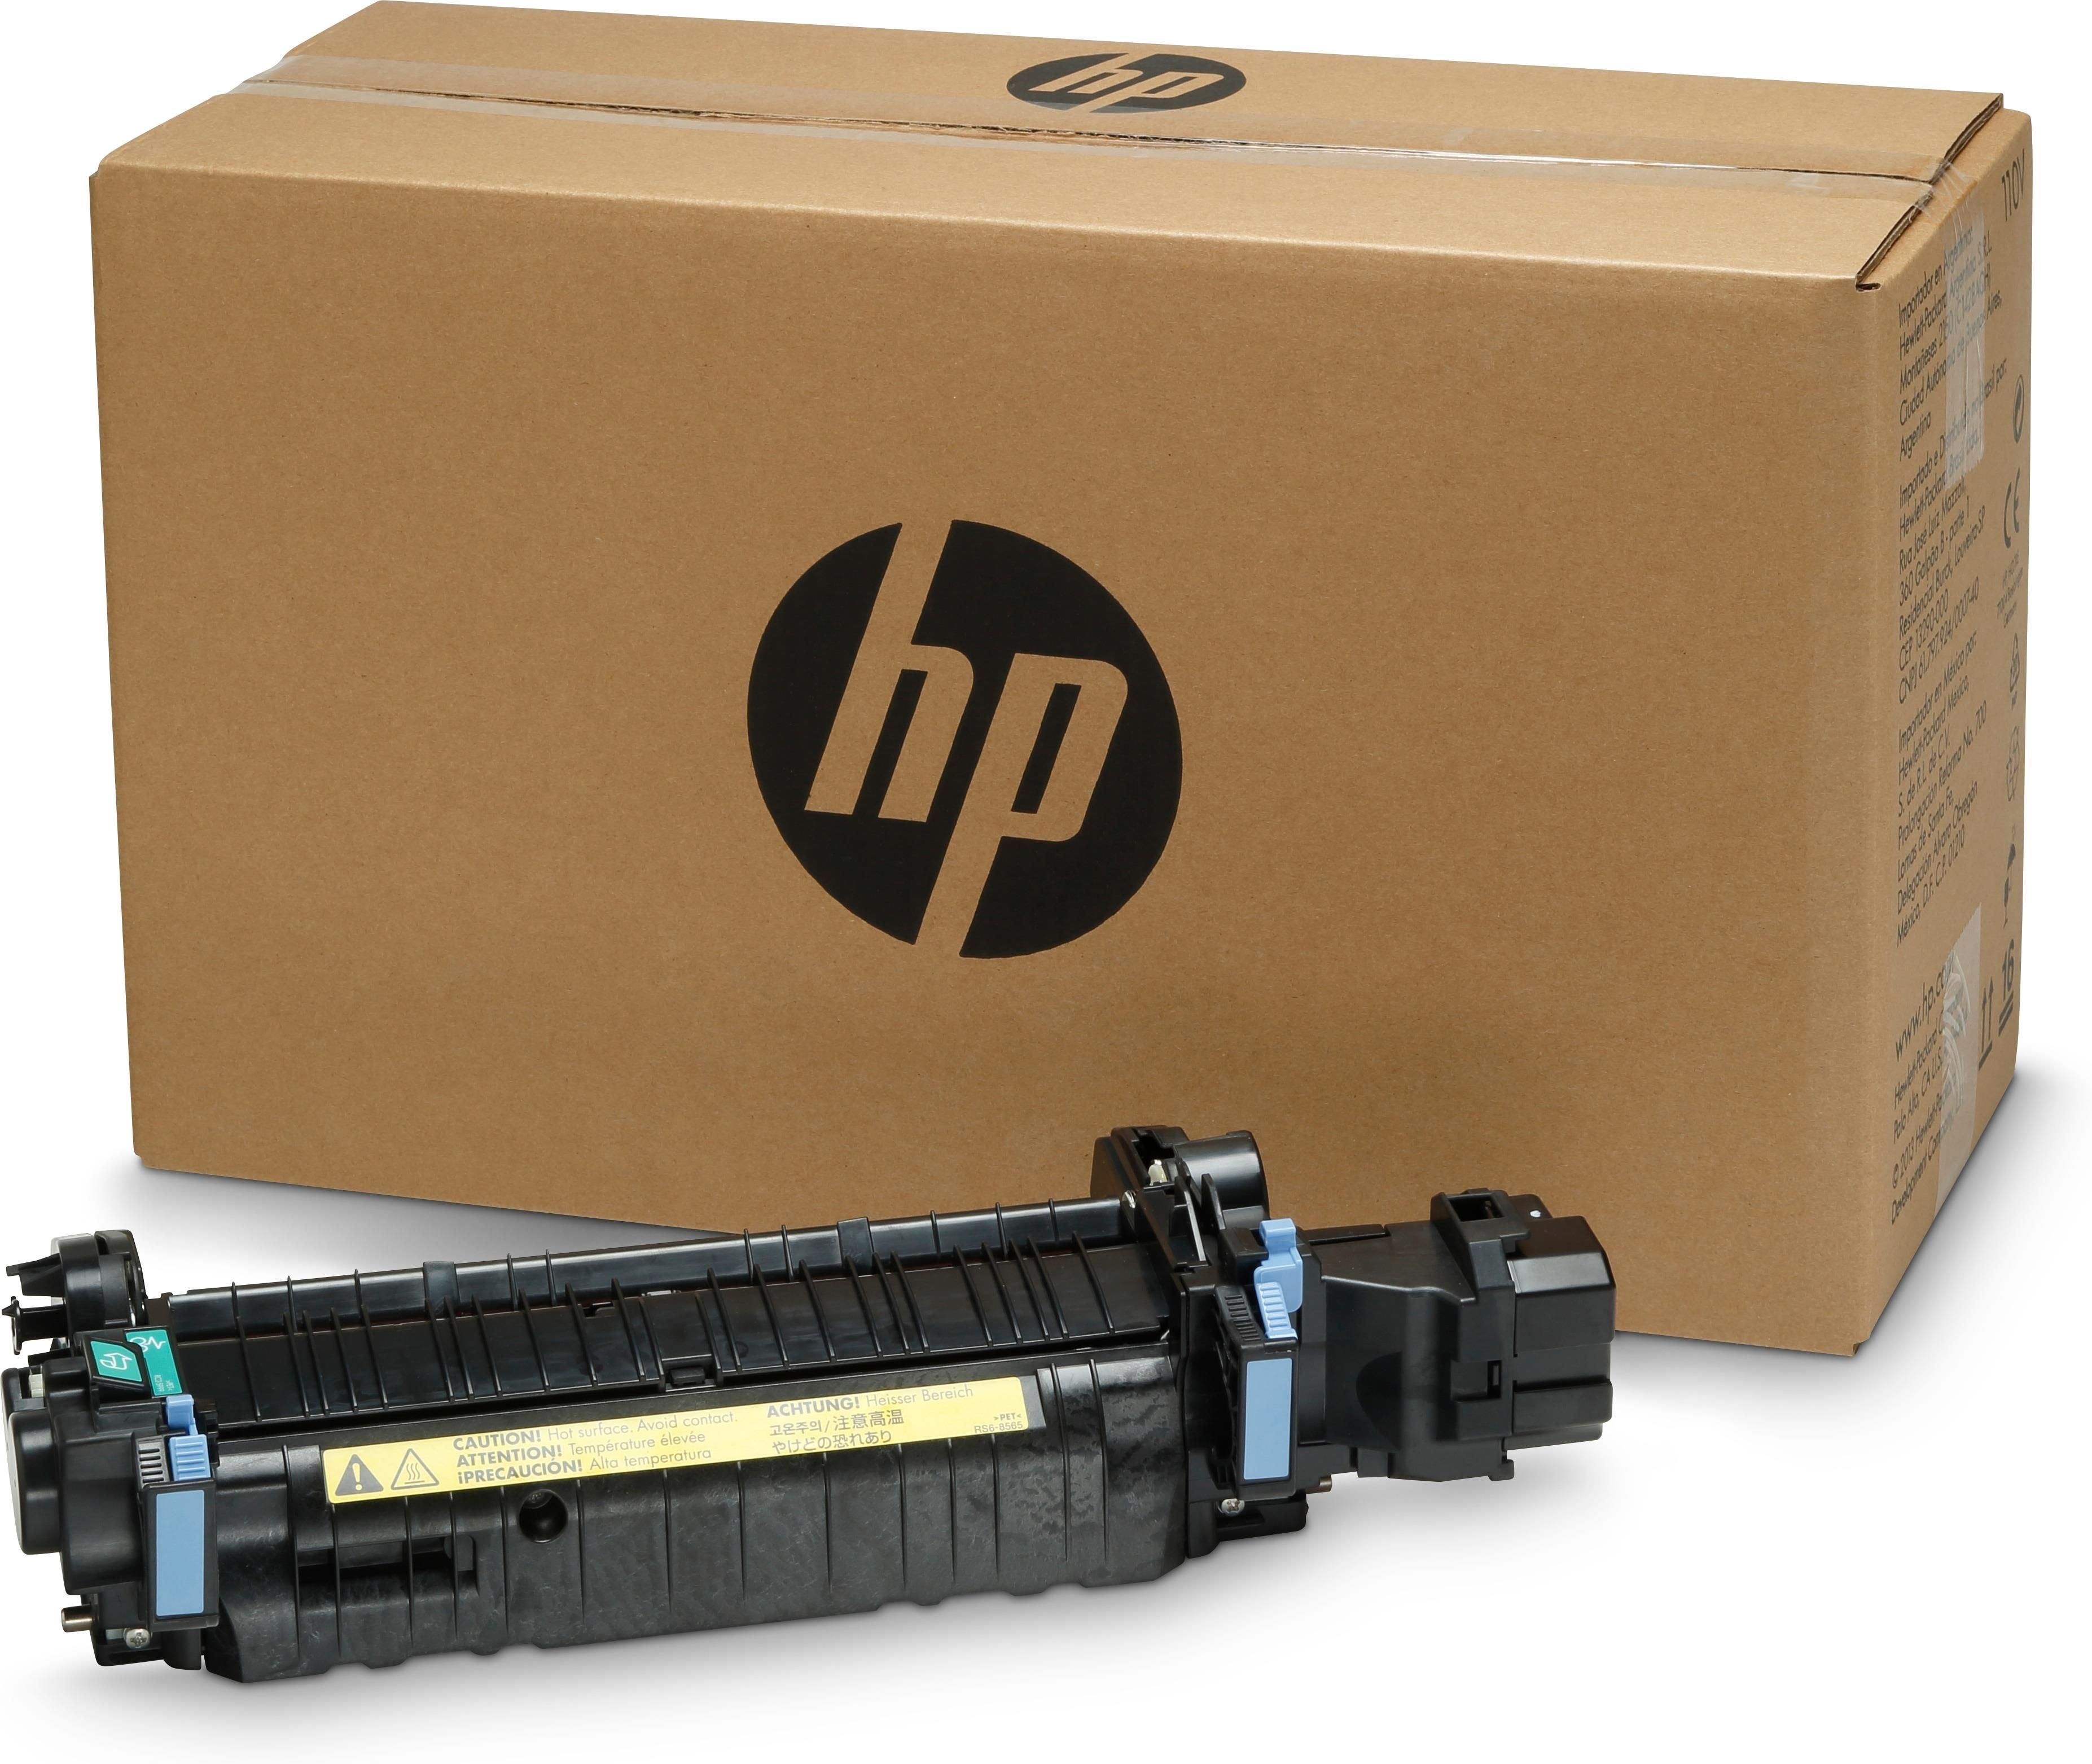 HP 110 V Kit